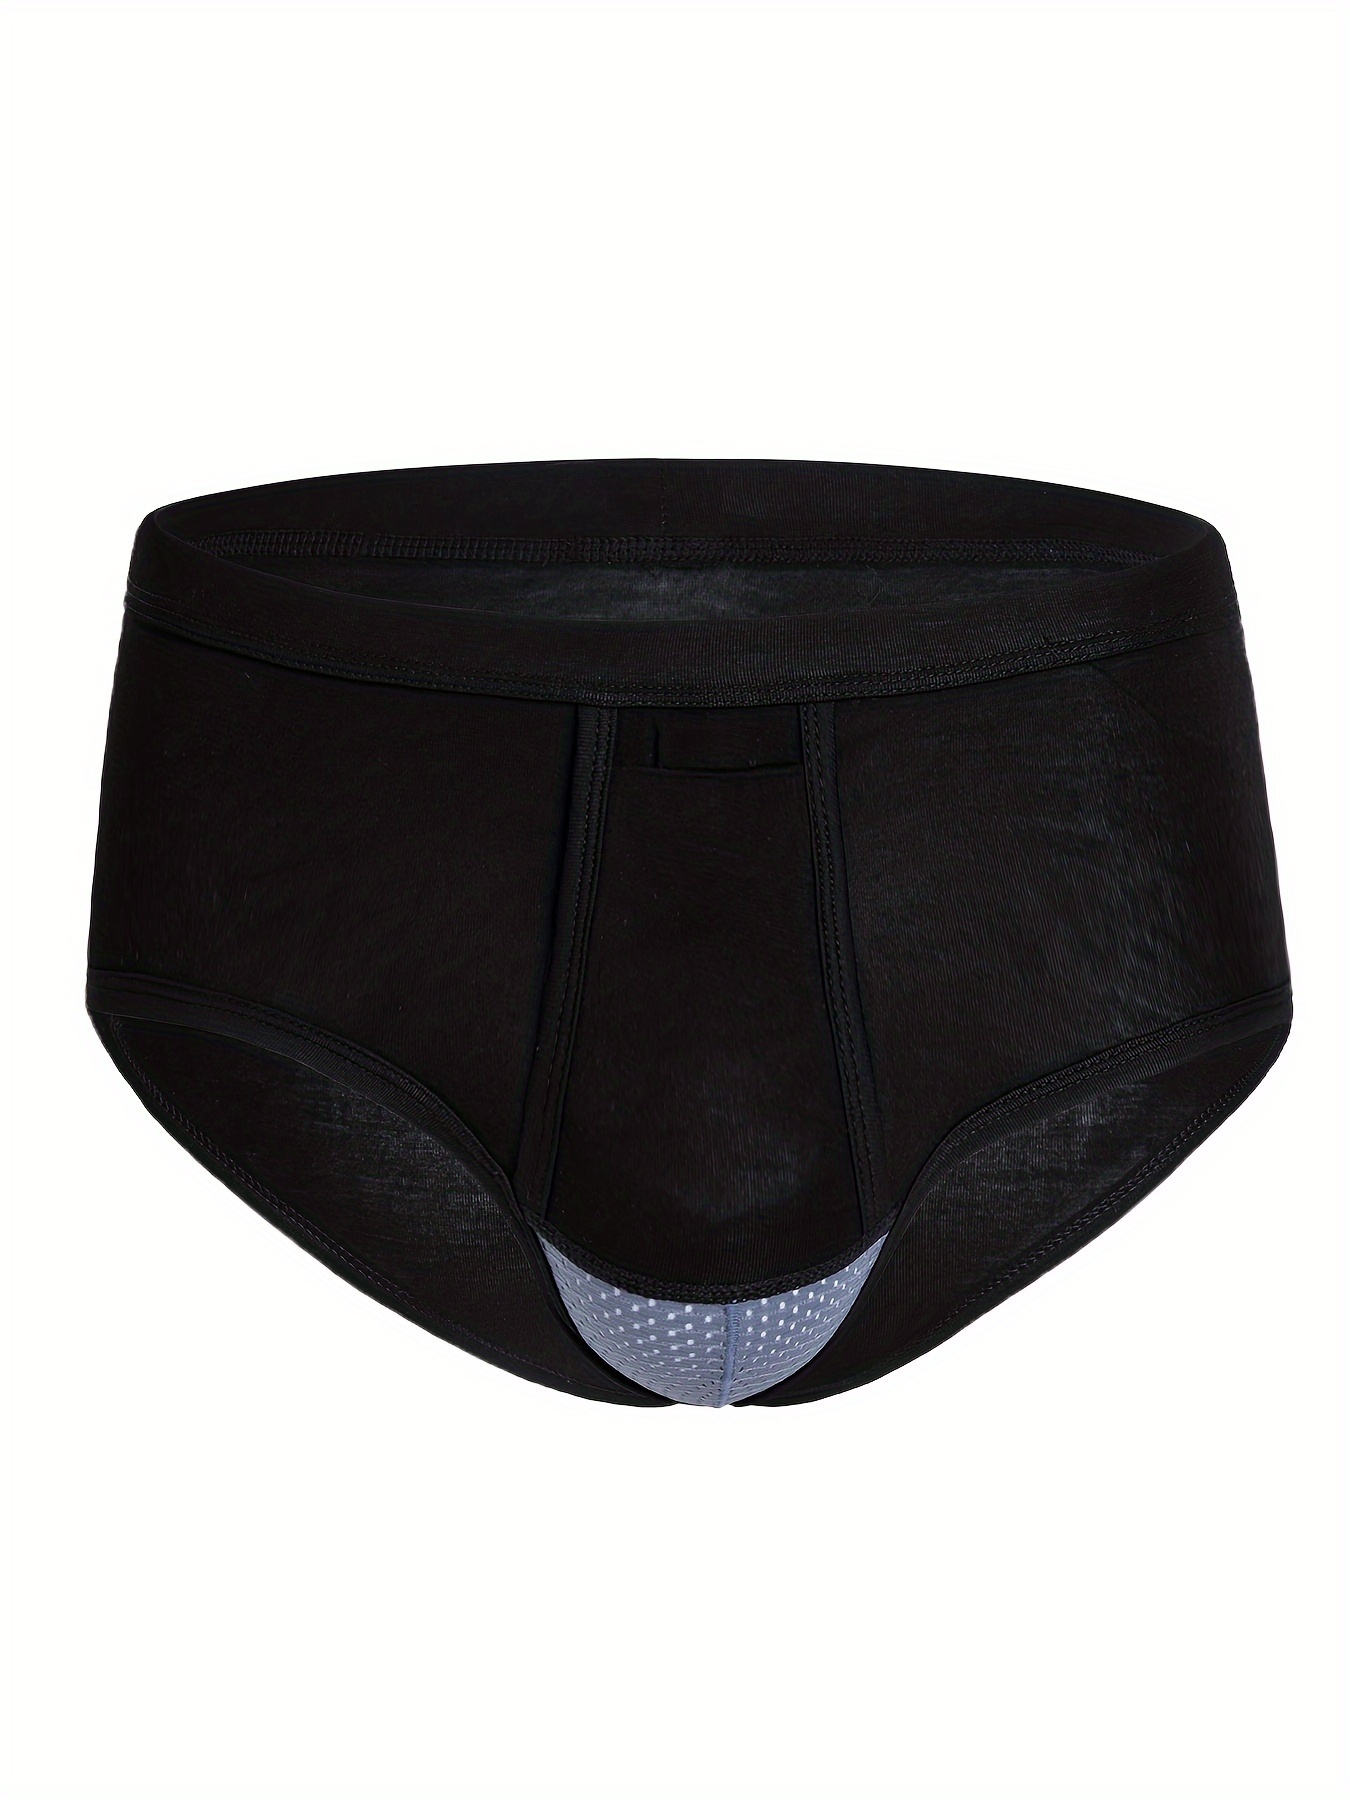 Soft bulge enhancing underwear For Comfort 